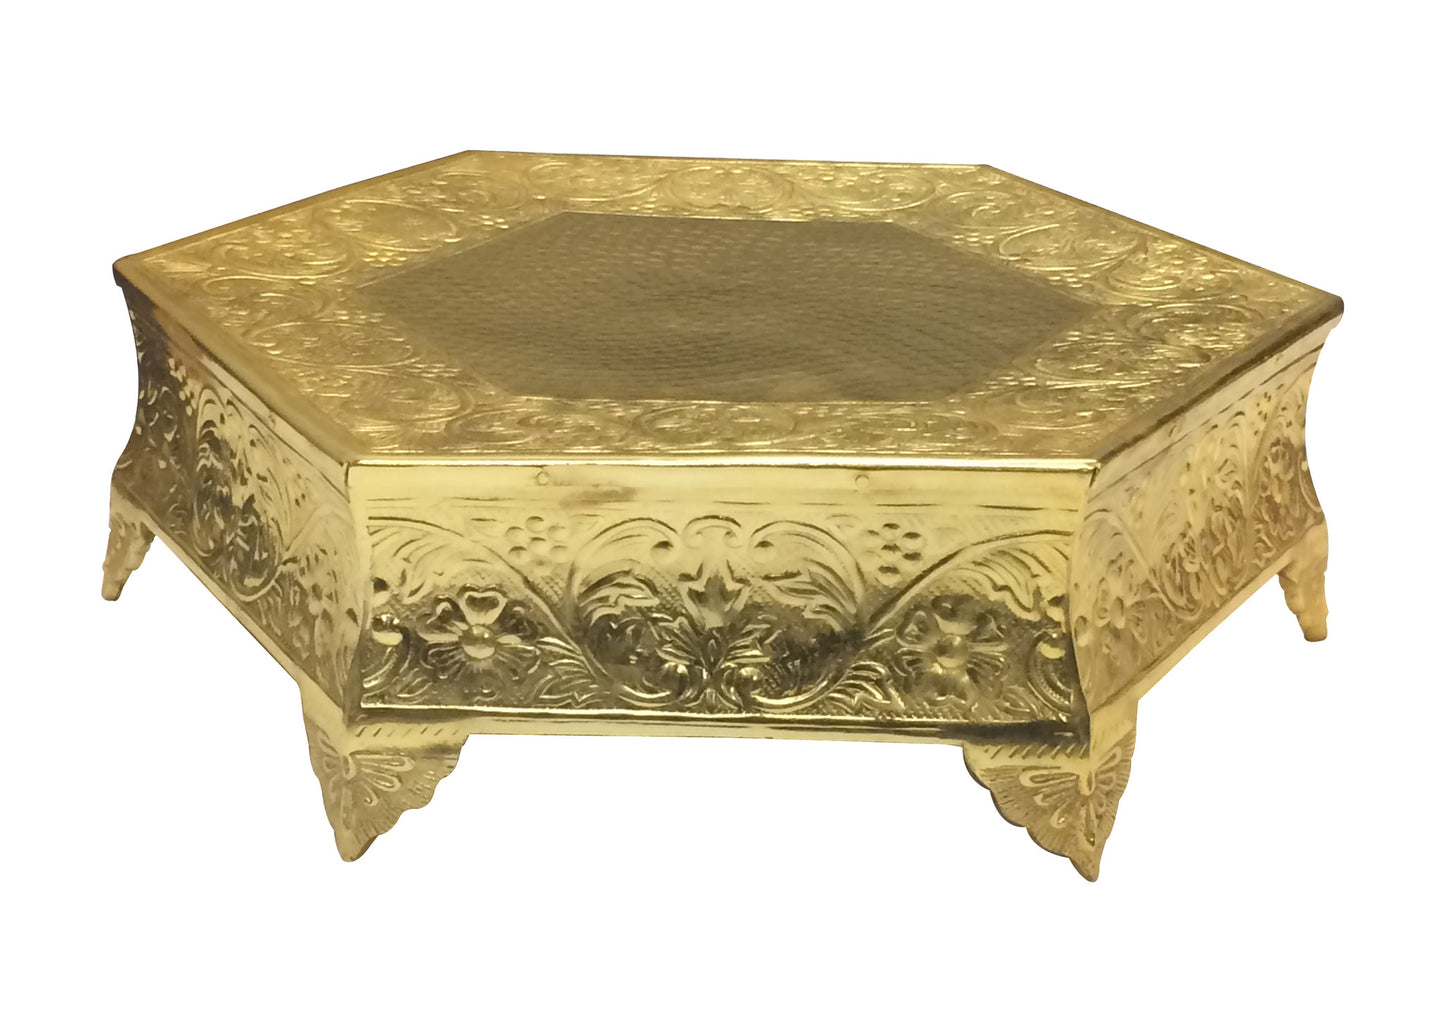 GiftBay Wedding Cake Stand Hexagonal Shape, 14-inch, Aluminum Gold